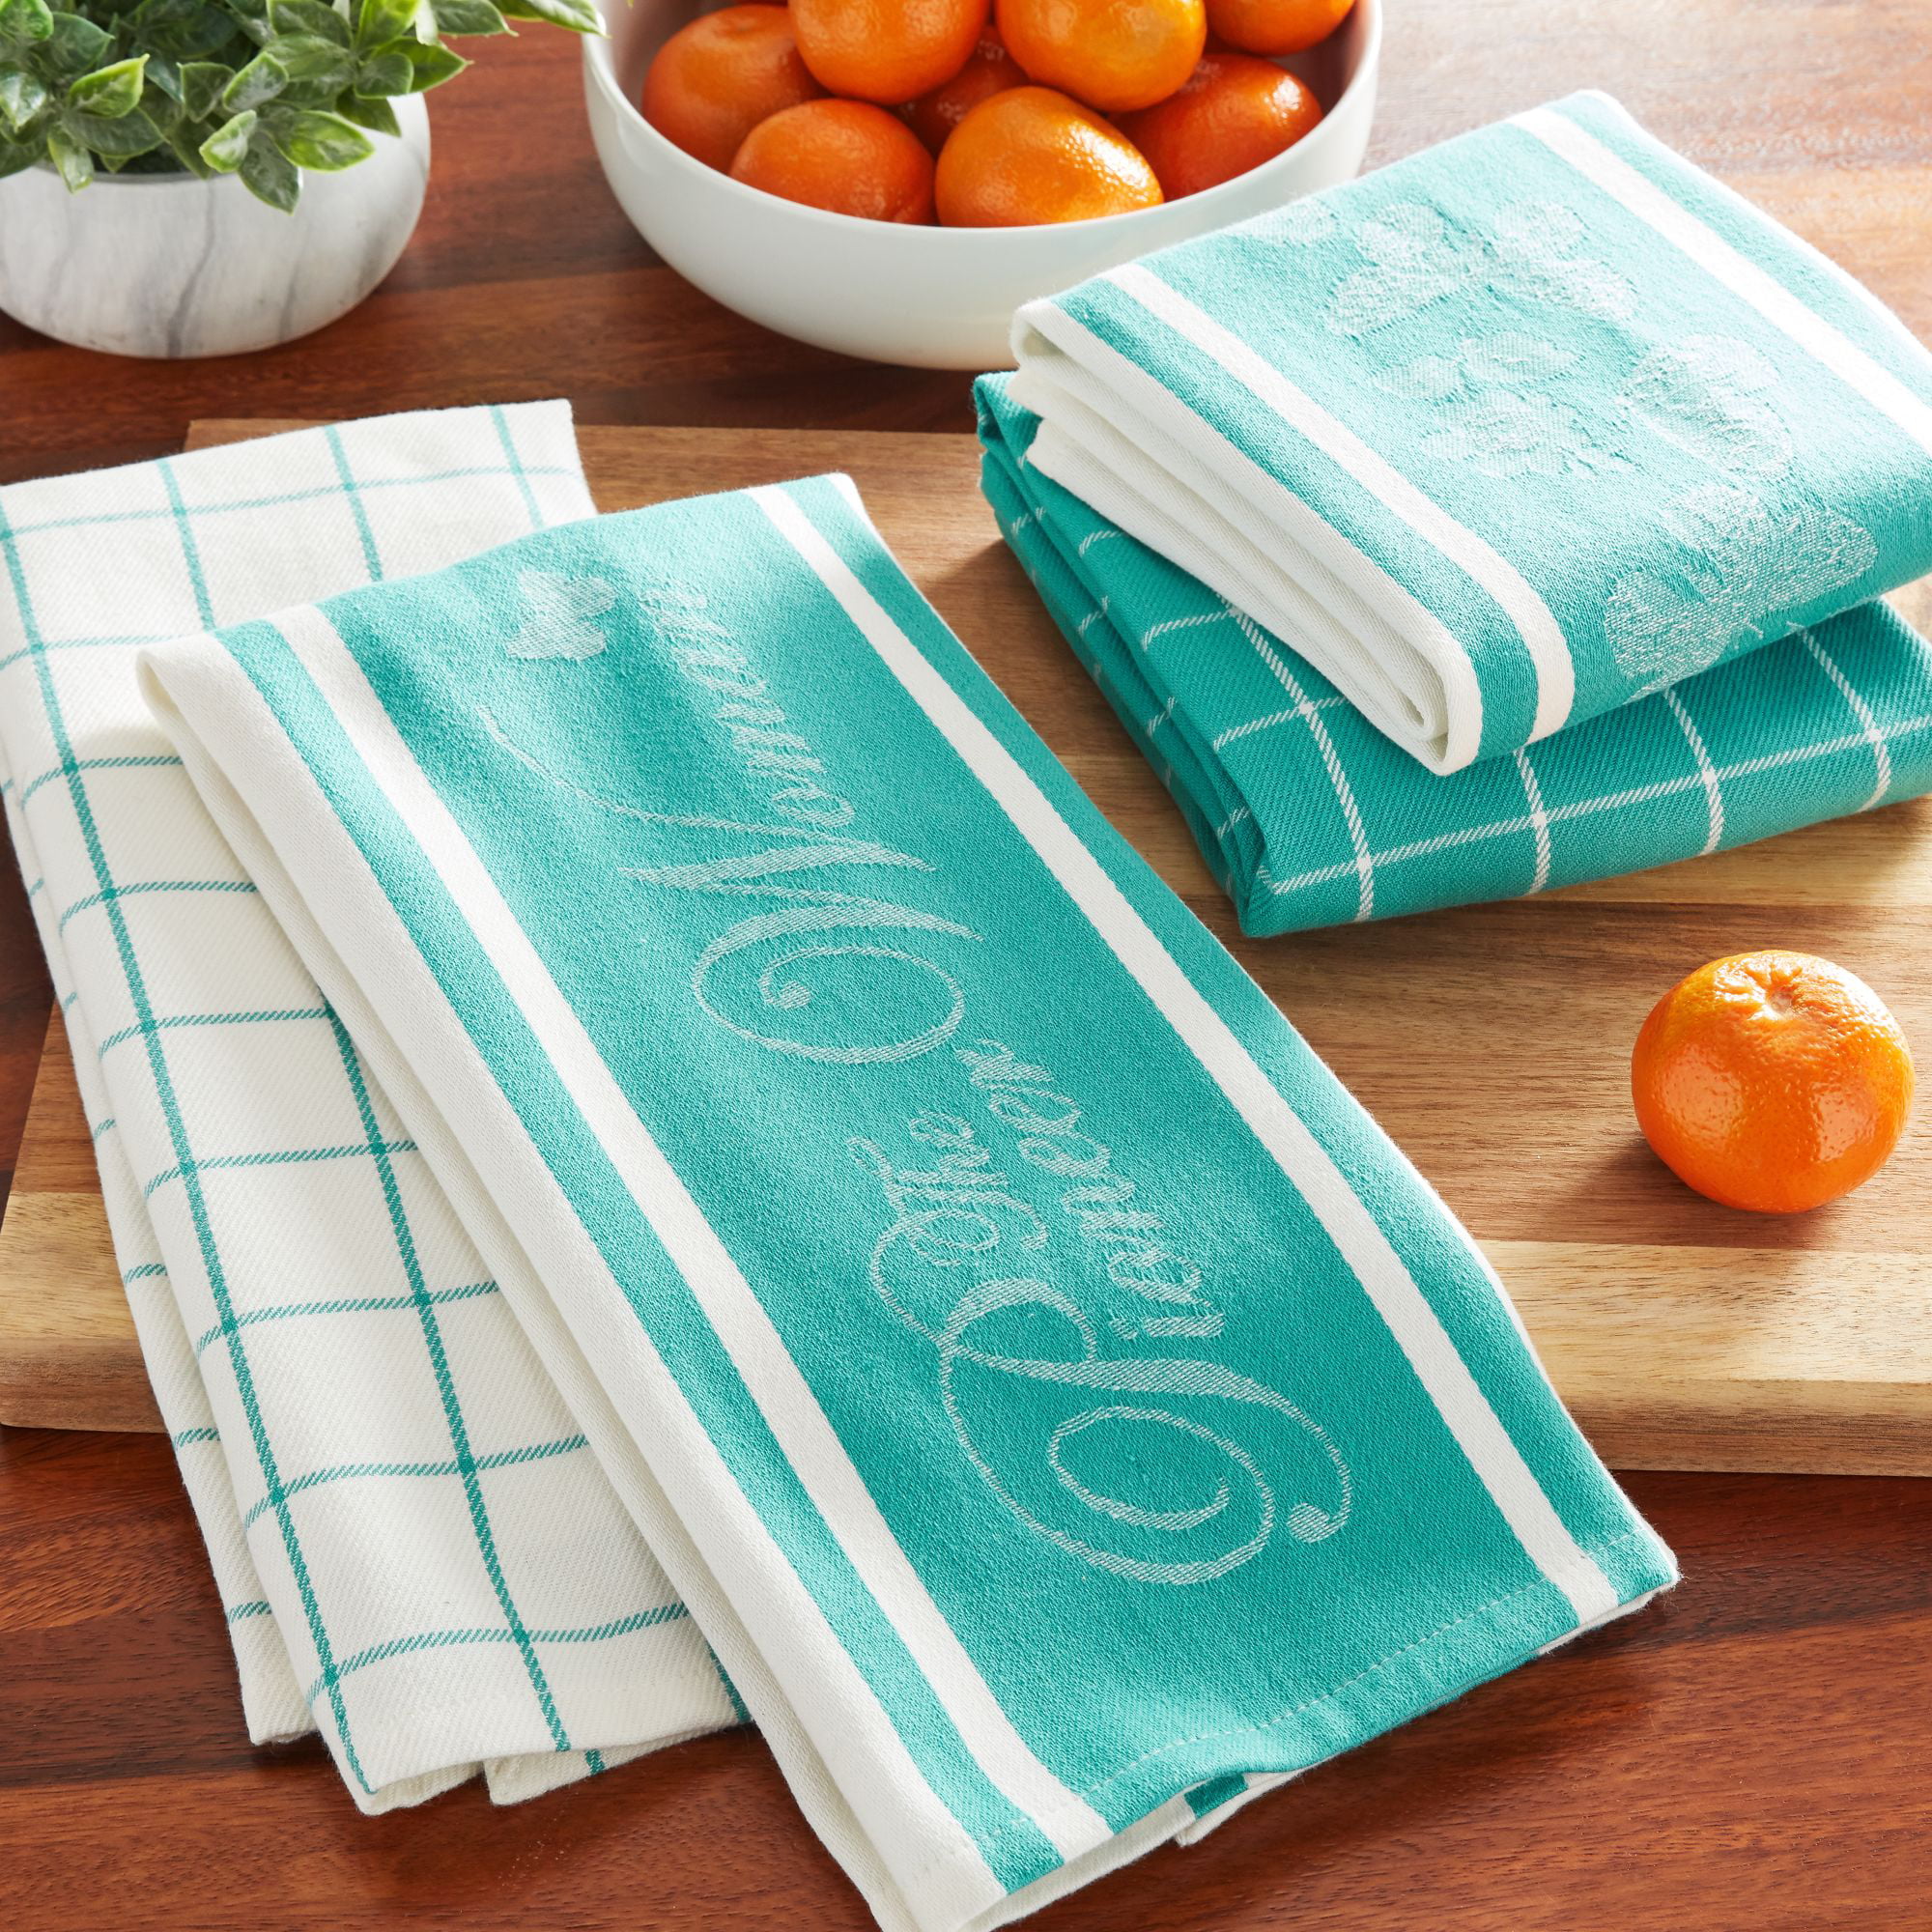 Food Network Dobby Textured Cloth Stripe Kitchen Towel 2-pk Blue 16 x 28